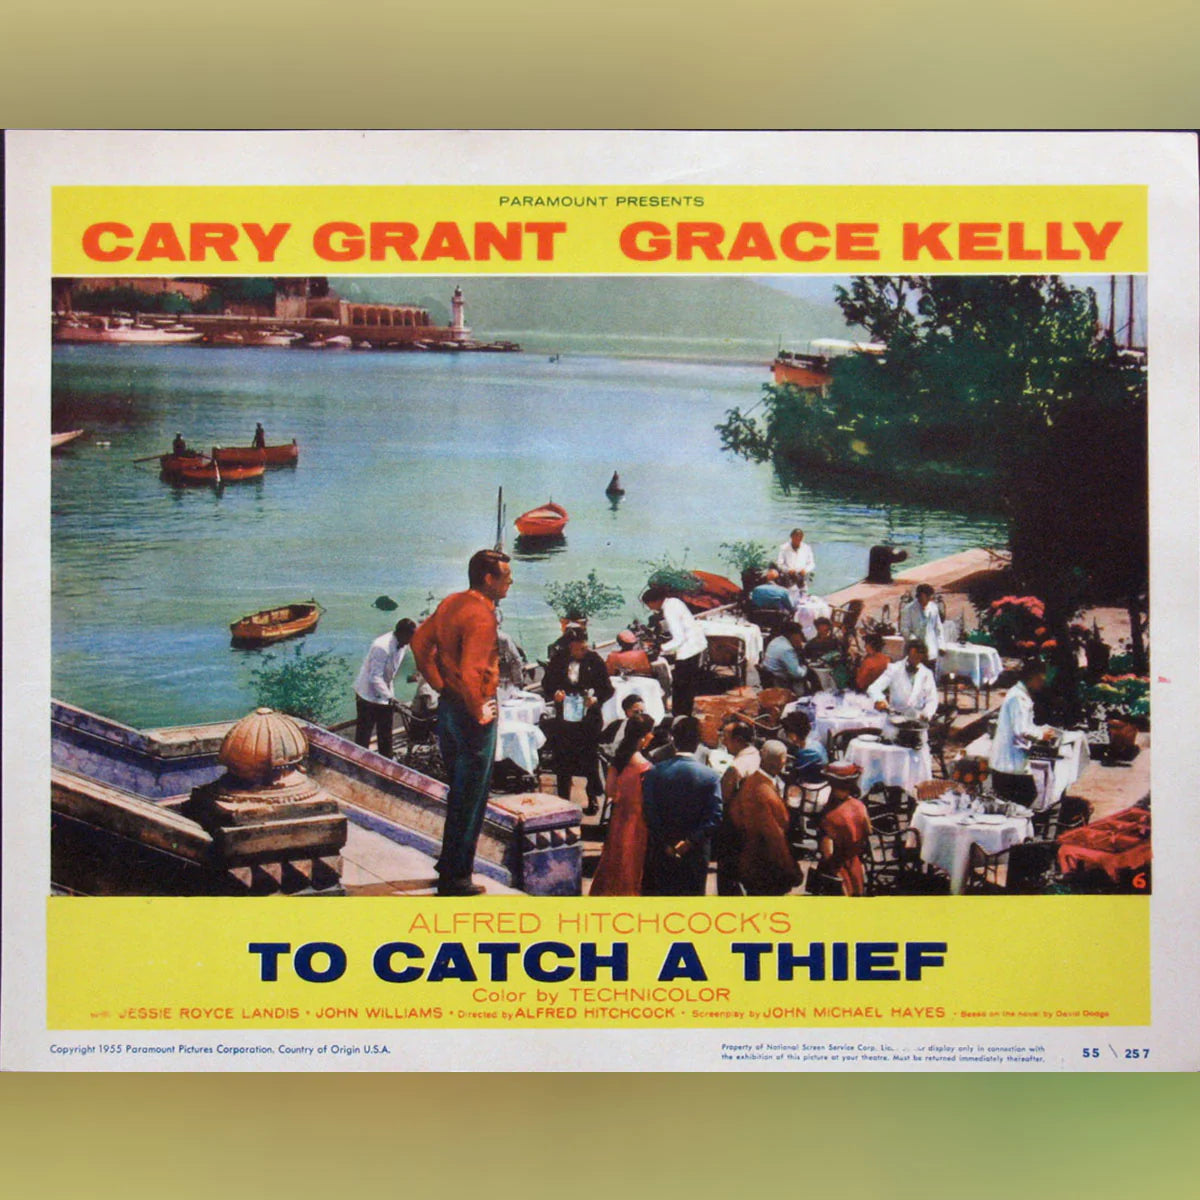 To Catch A Thief (1955)